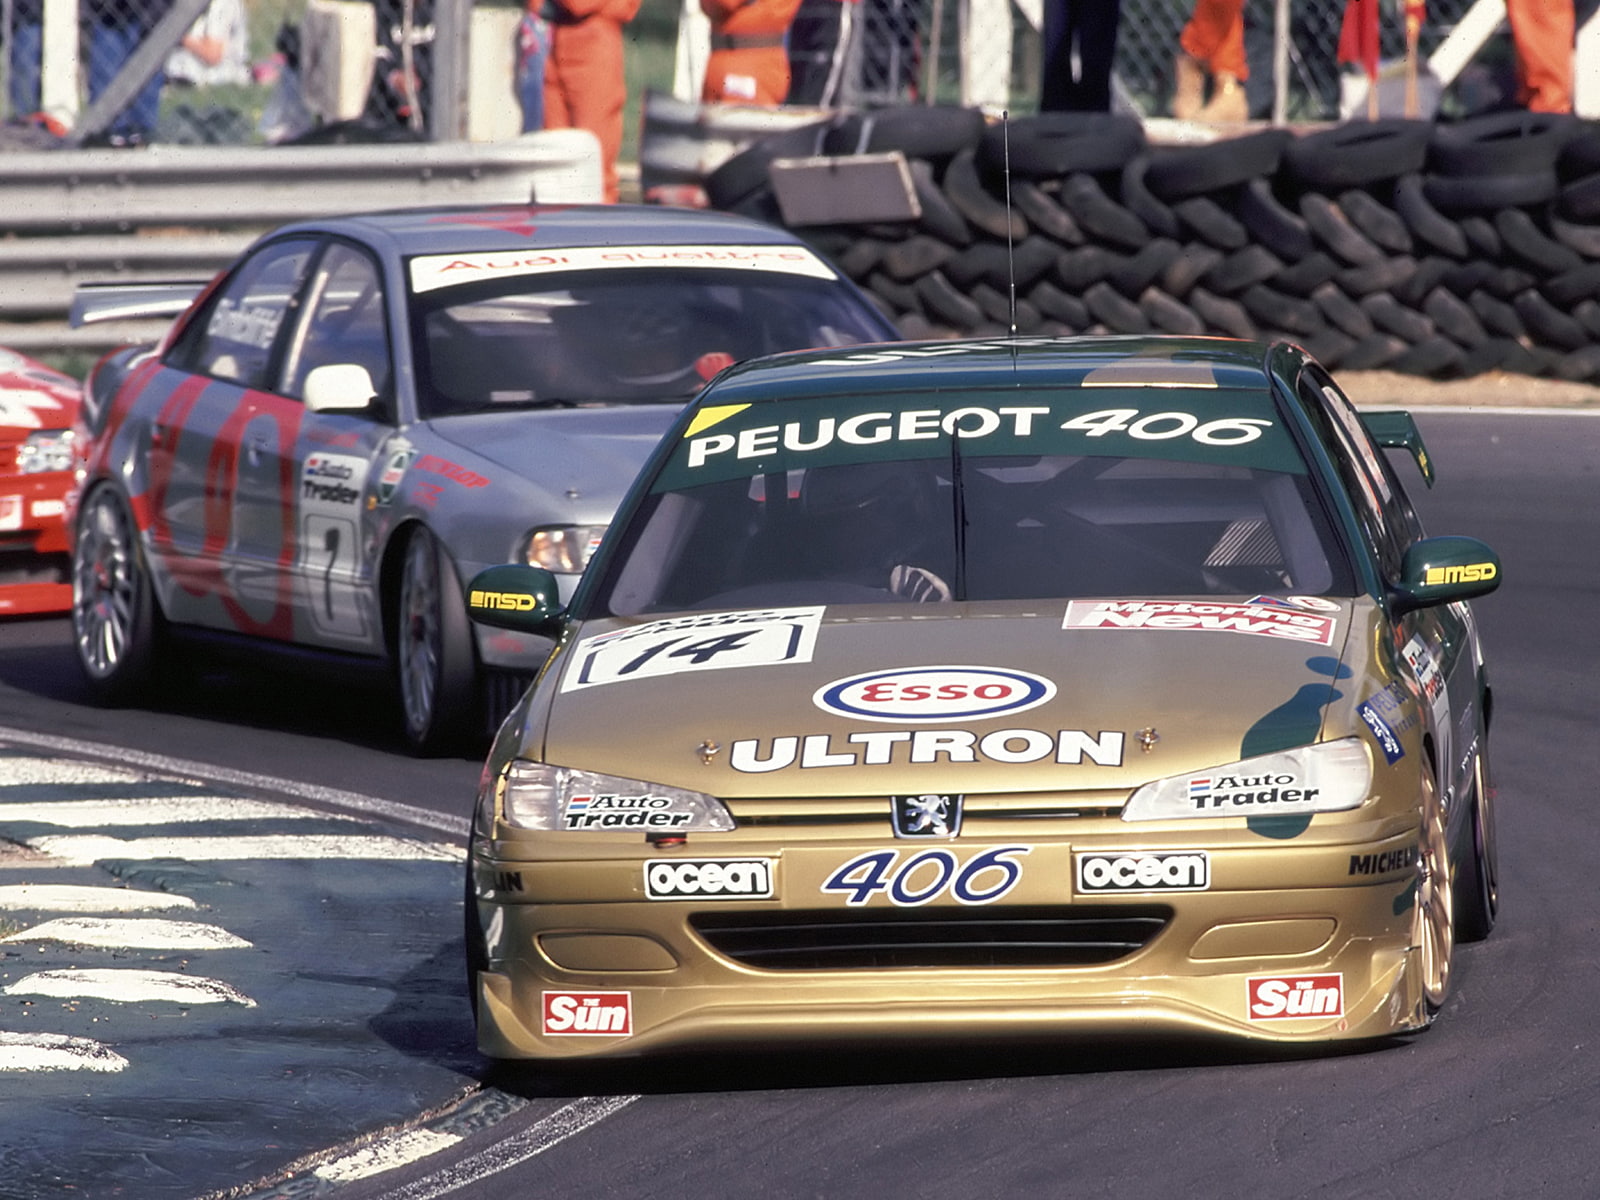 1996, 406, btcc, peugeot, race, racing